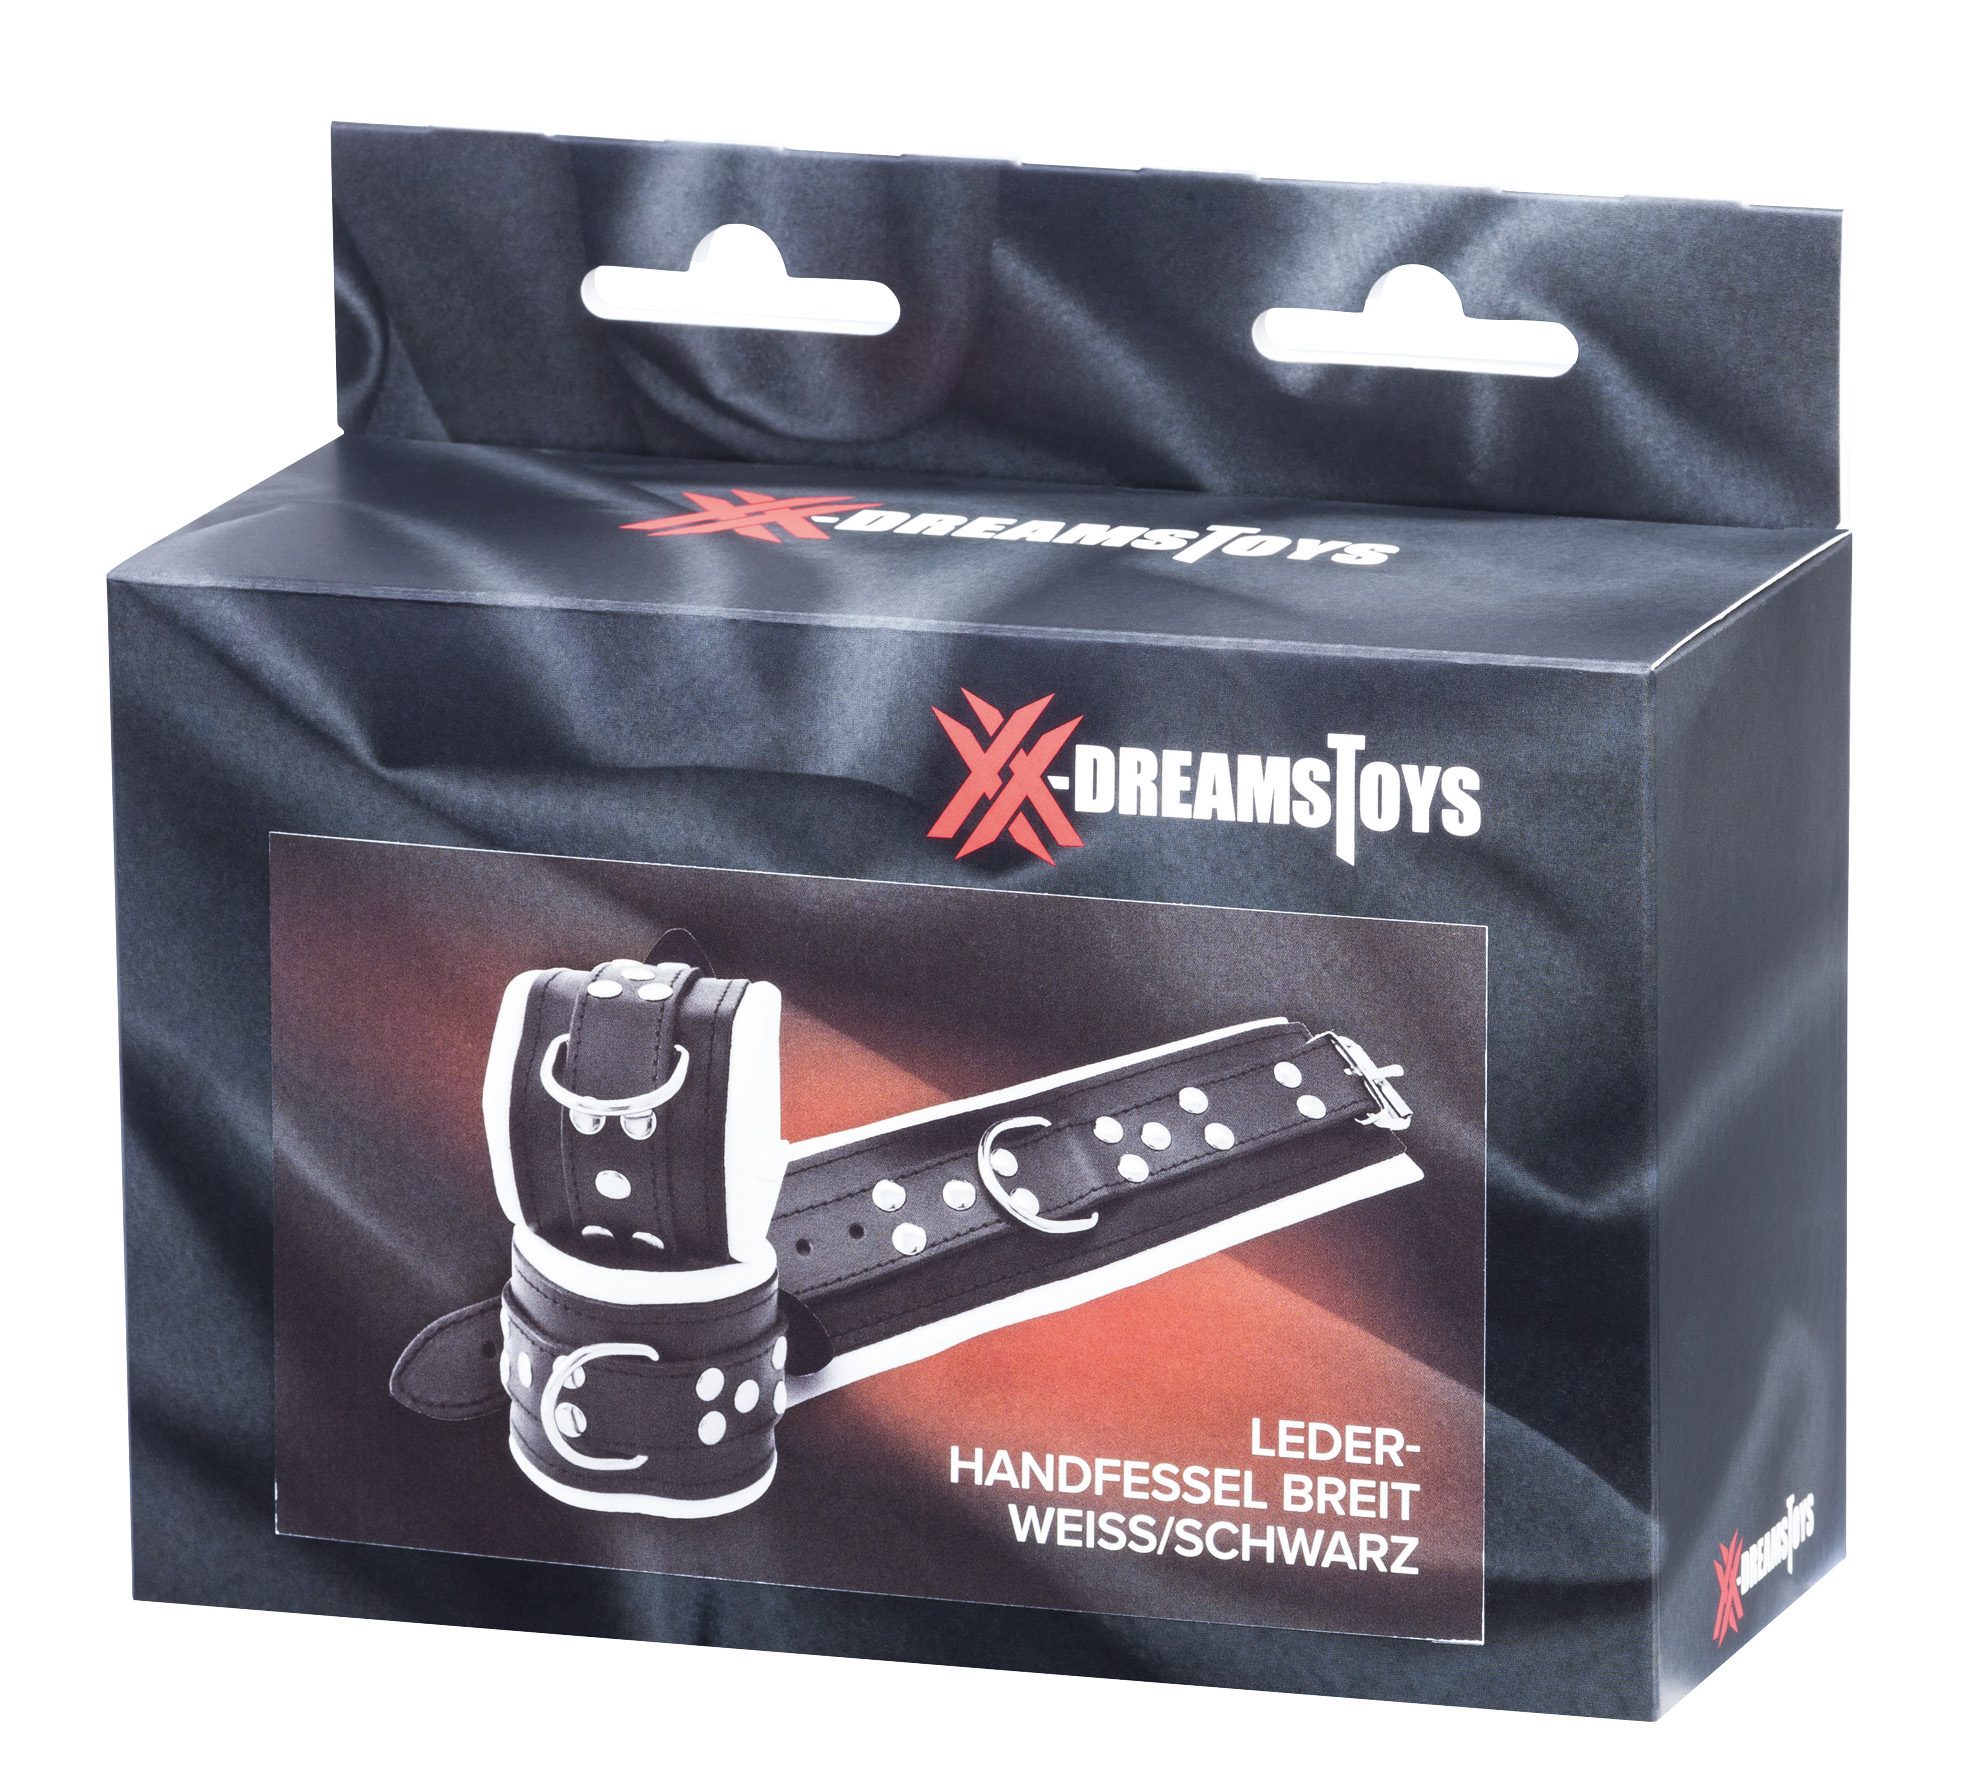 XX-DREAMSTOYS Leder-Handfessel breit weiss/schwarz